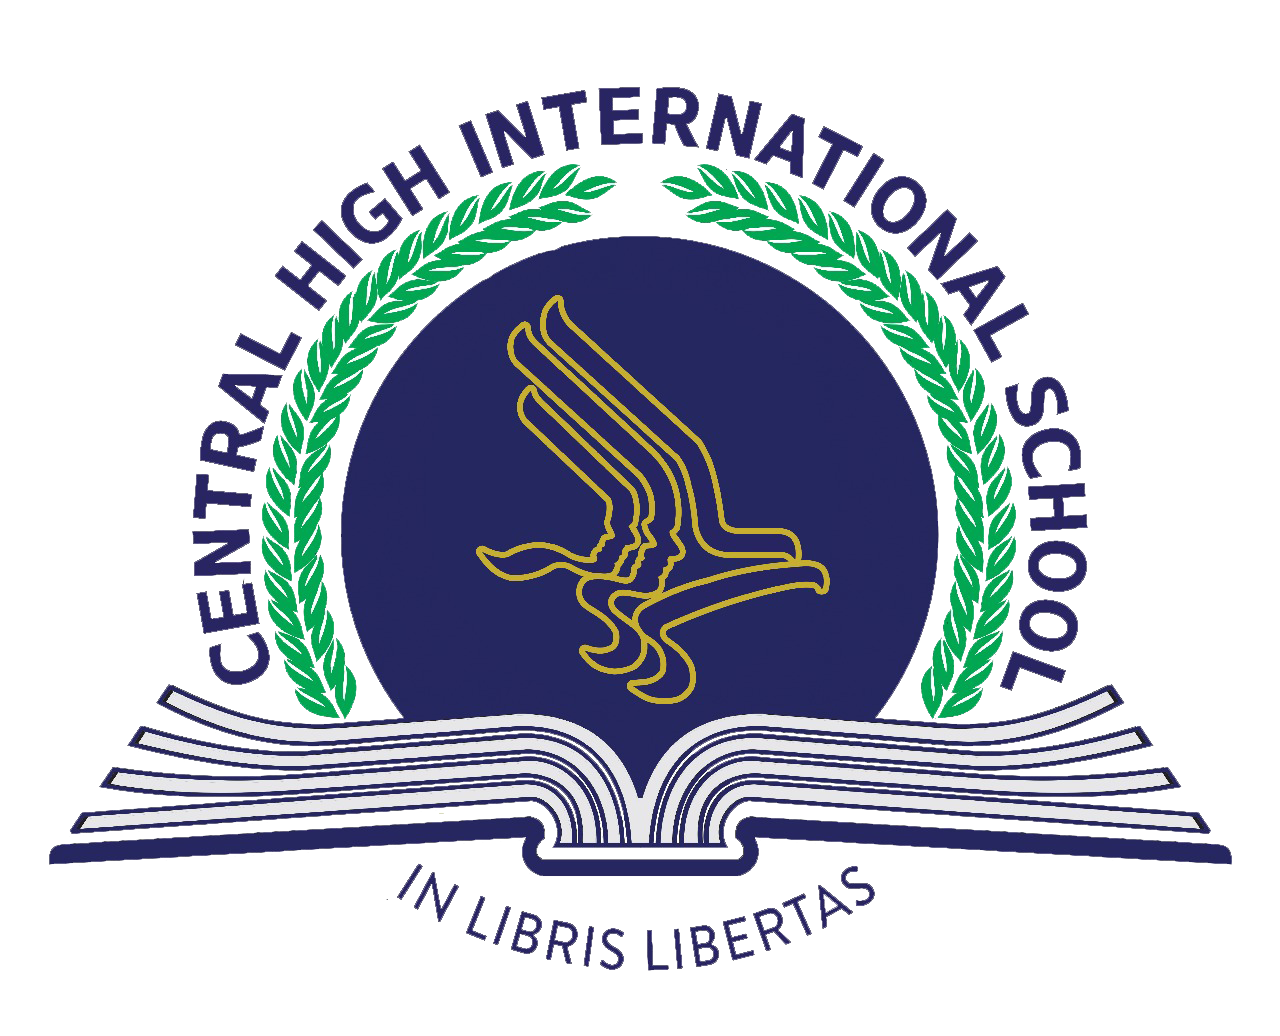 Central High International School